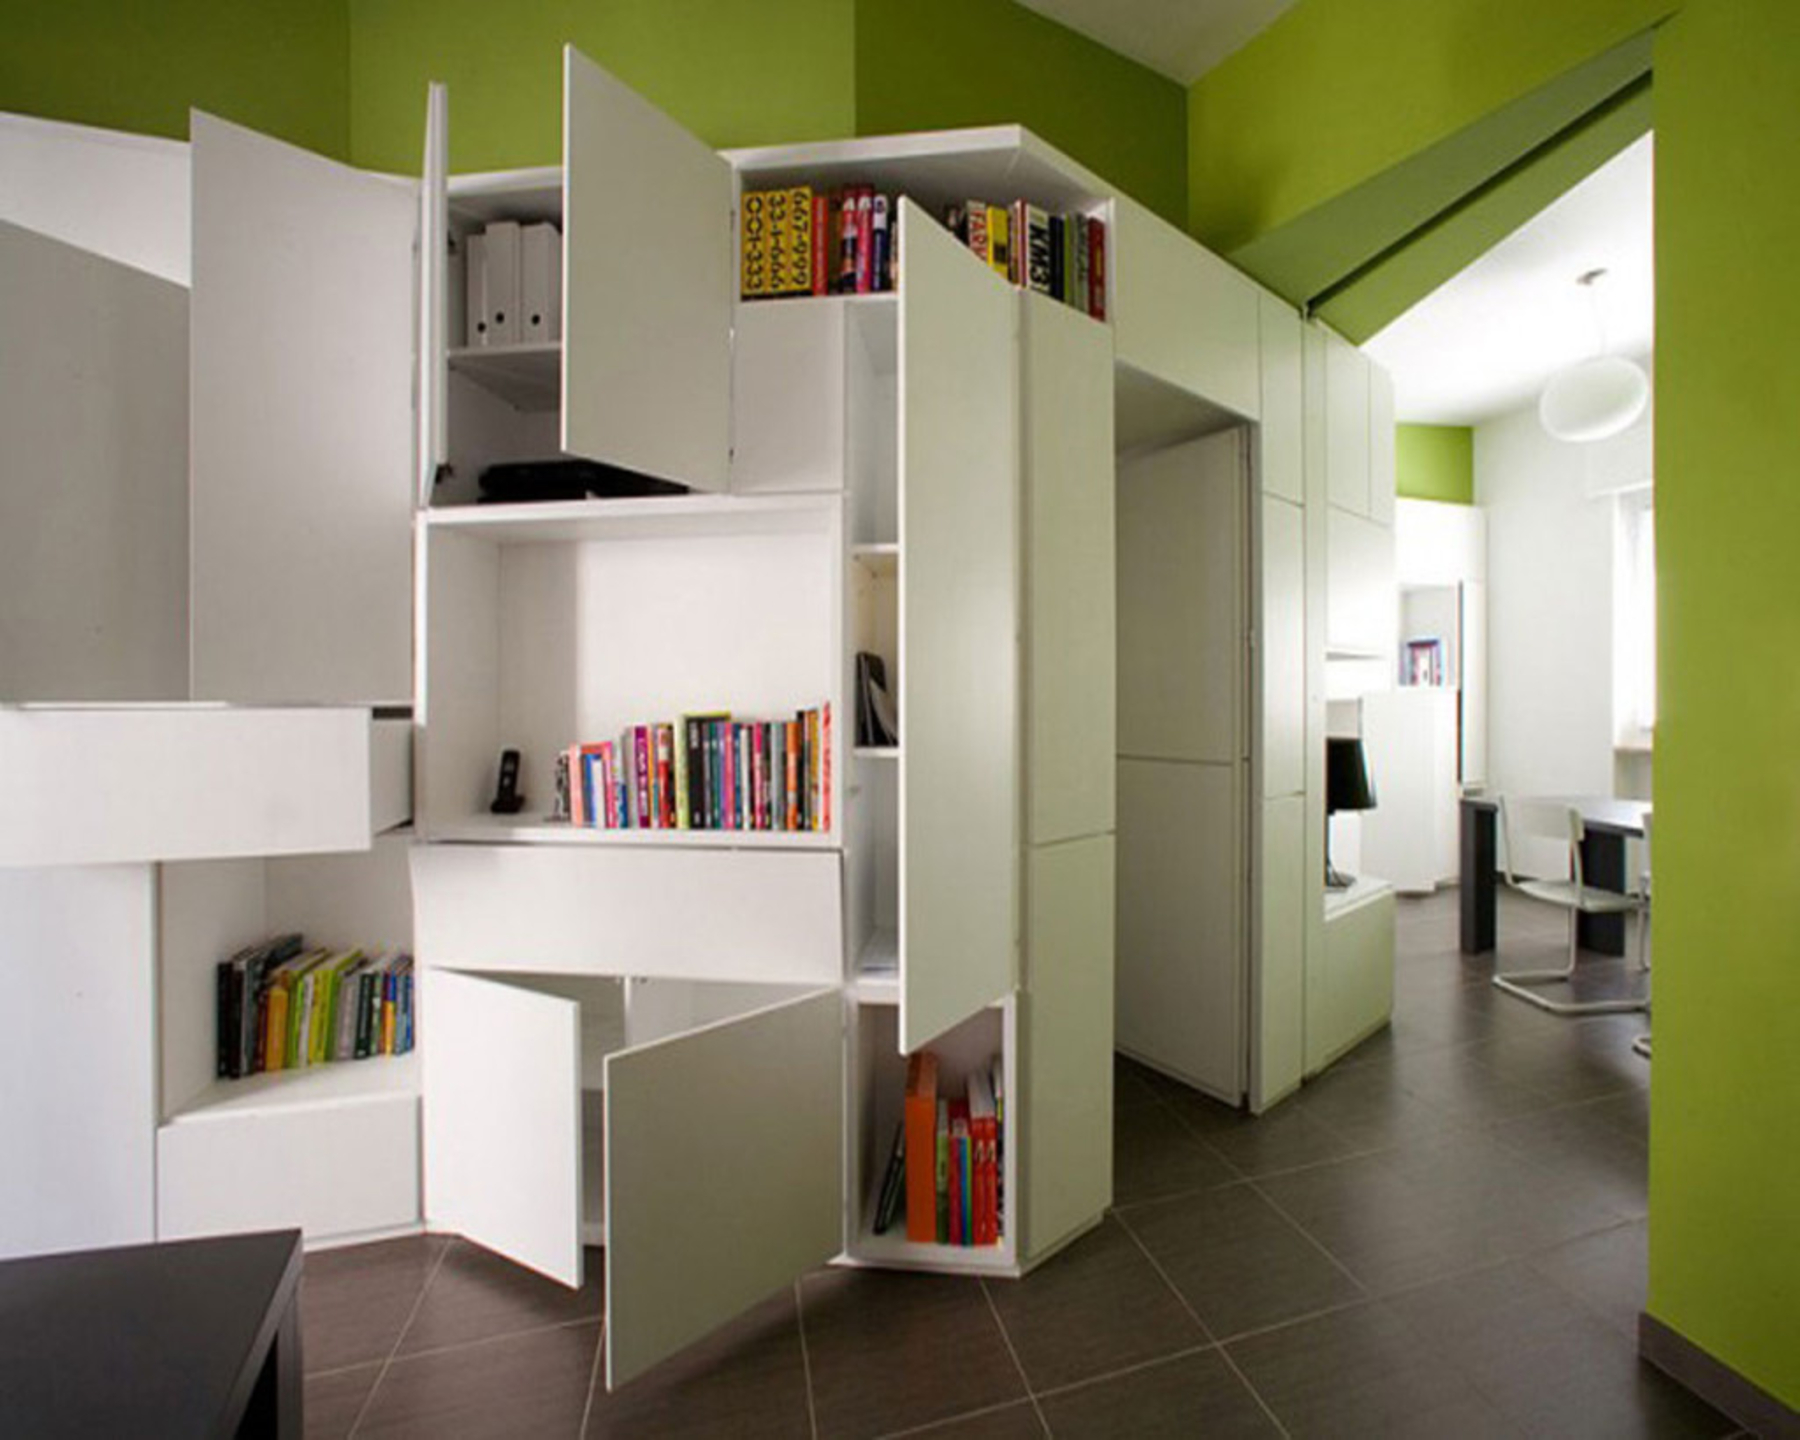 Creative Storage Solutions Using Furniture